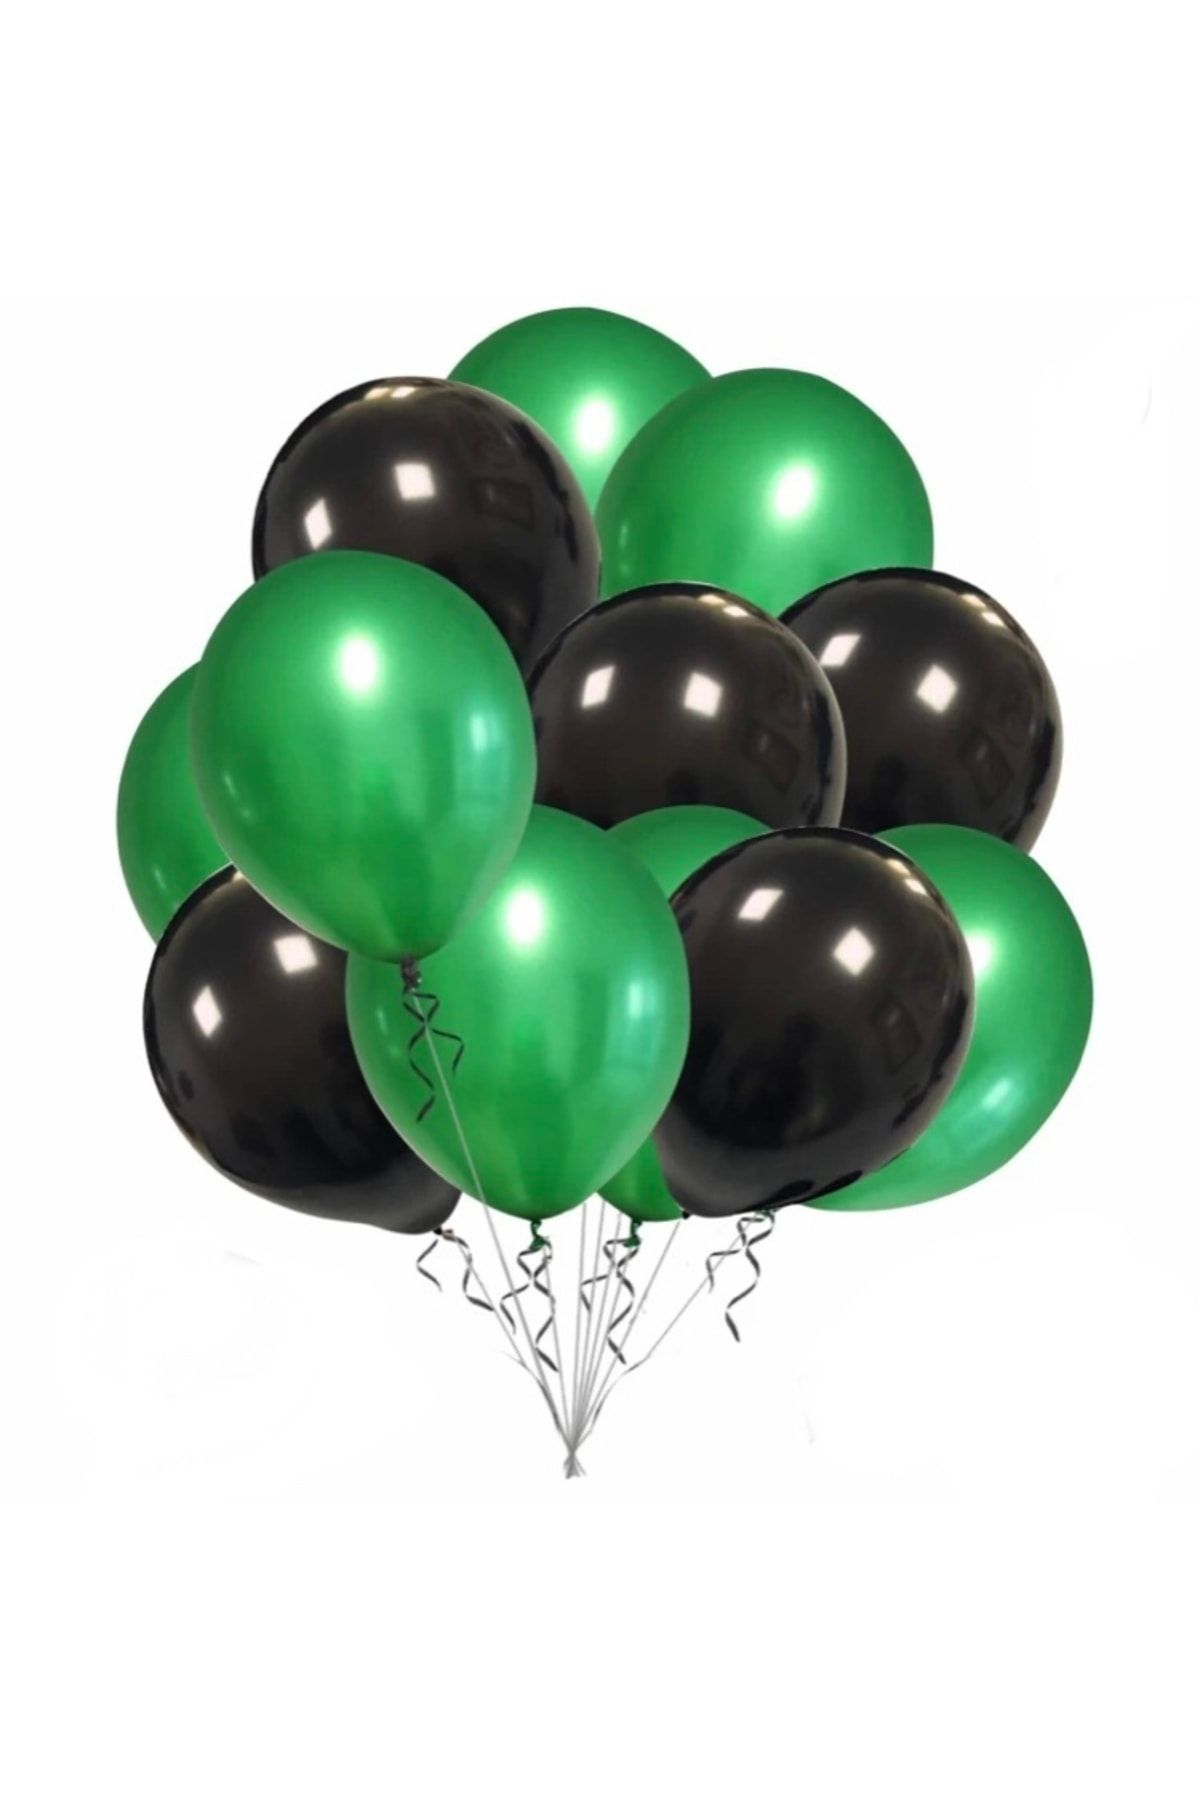 Deniz Party Store Hulk Metalik Koyu Yeşil Siyah Balon 12 Inç 10 Adet